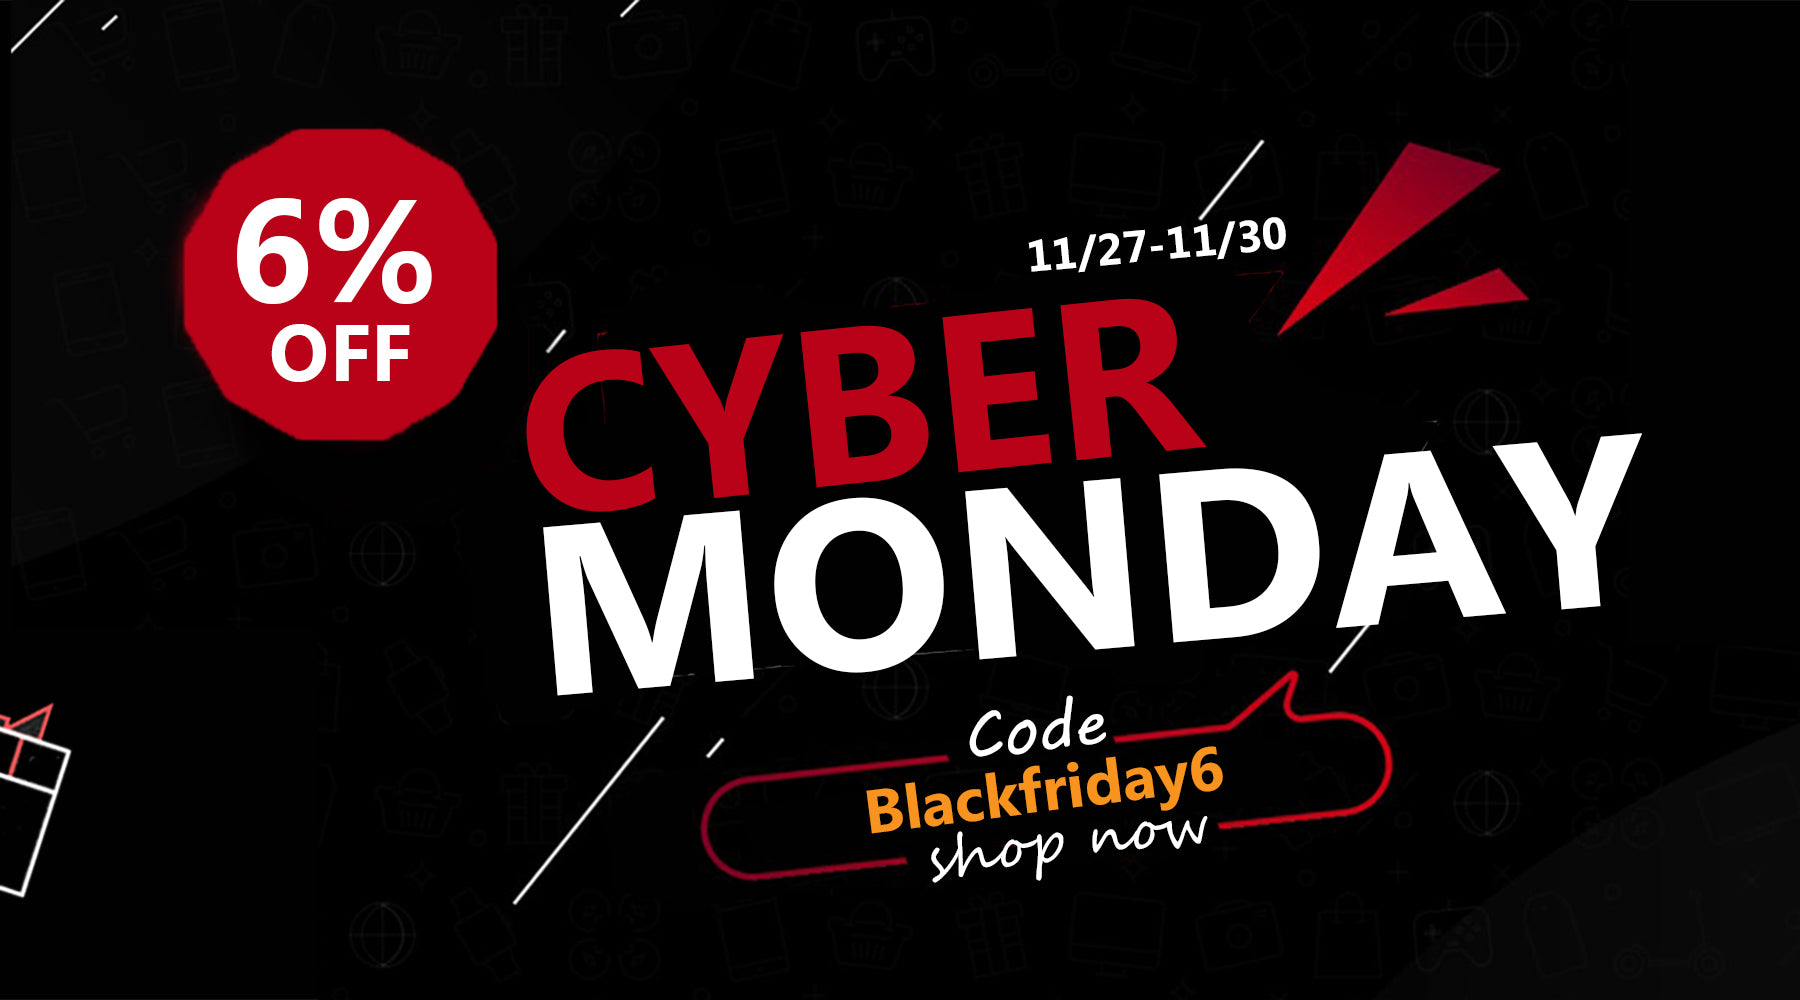 Black Friday & Cyber Monday Sale